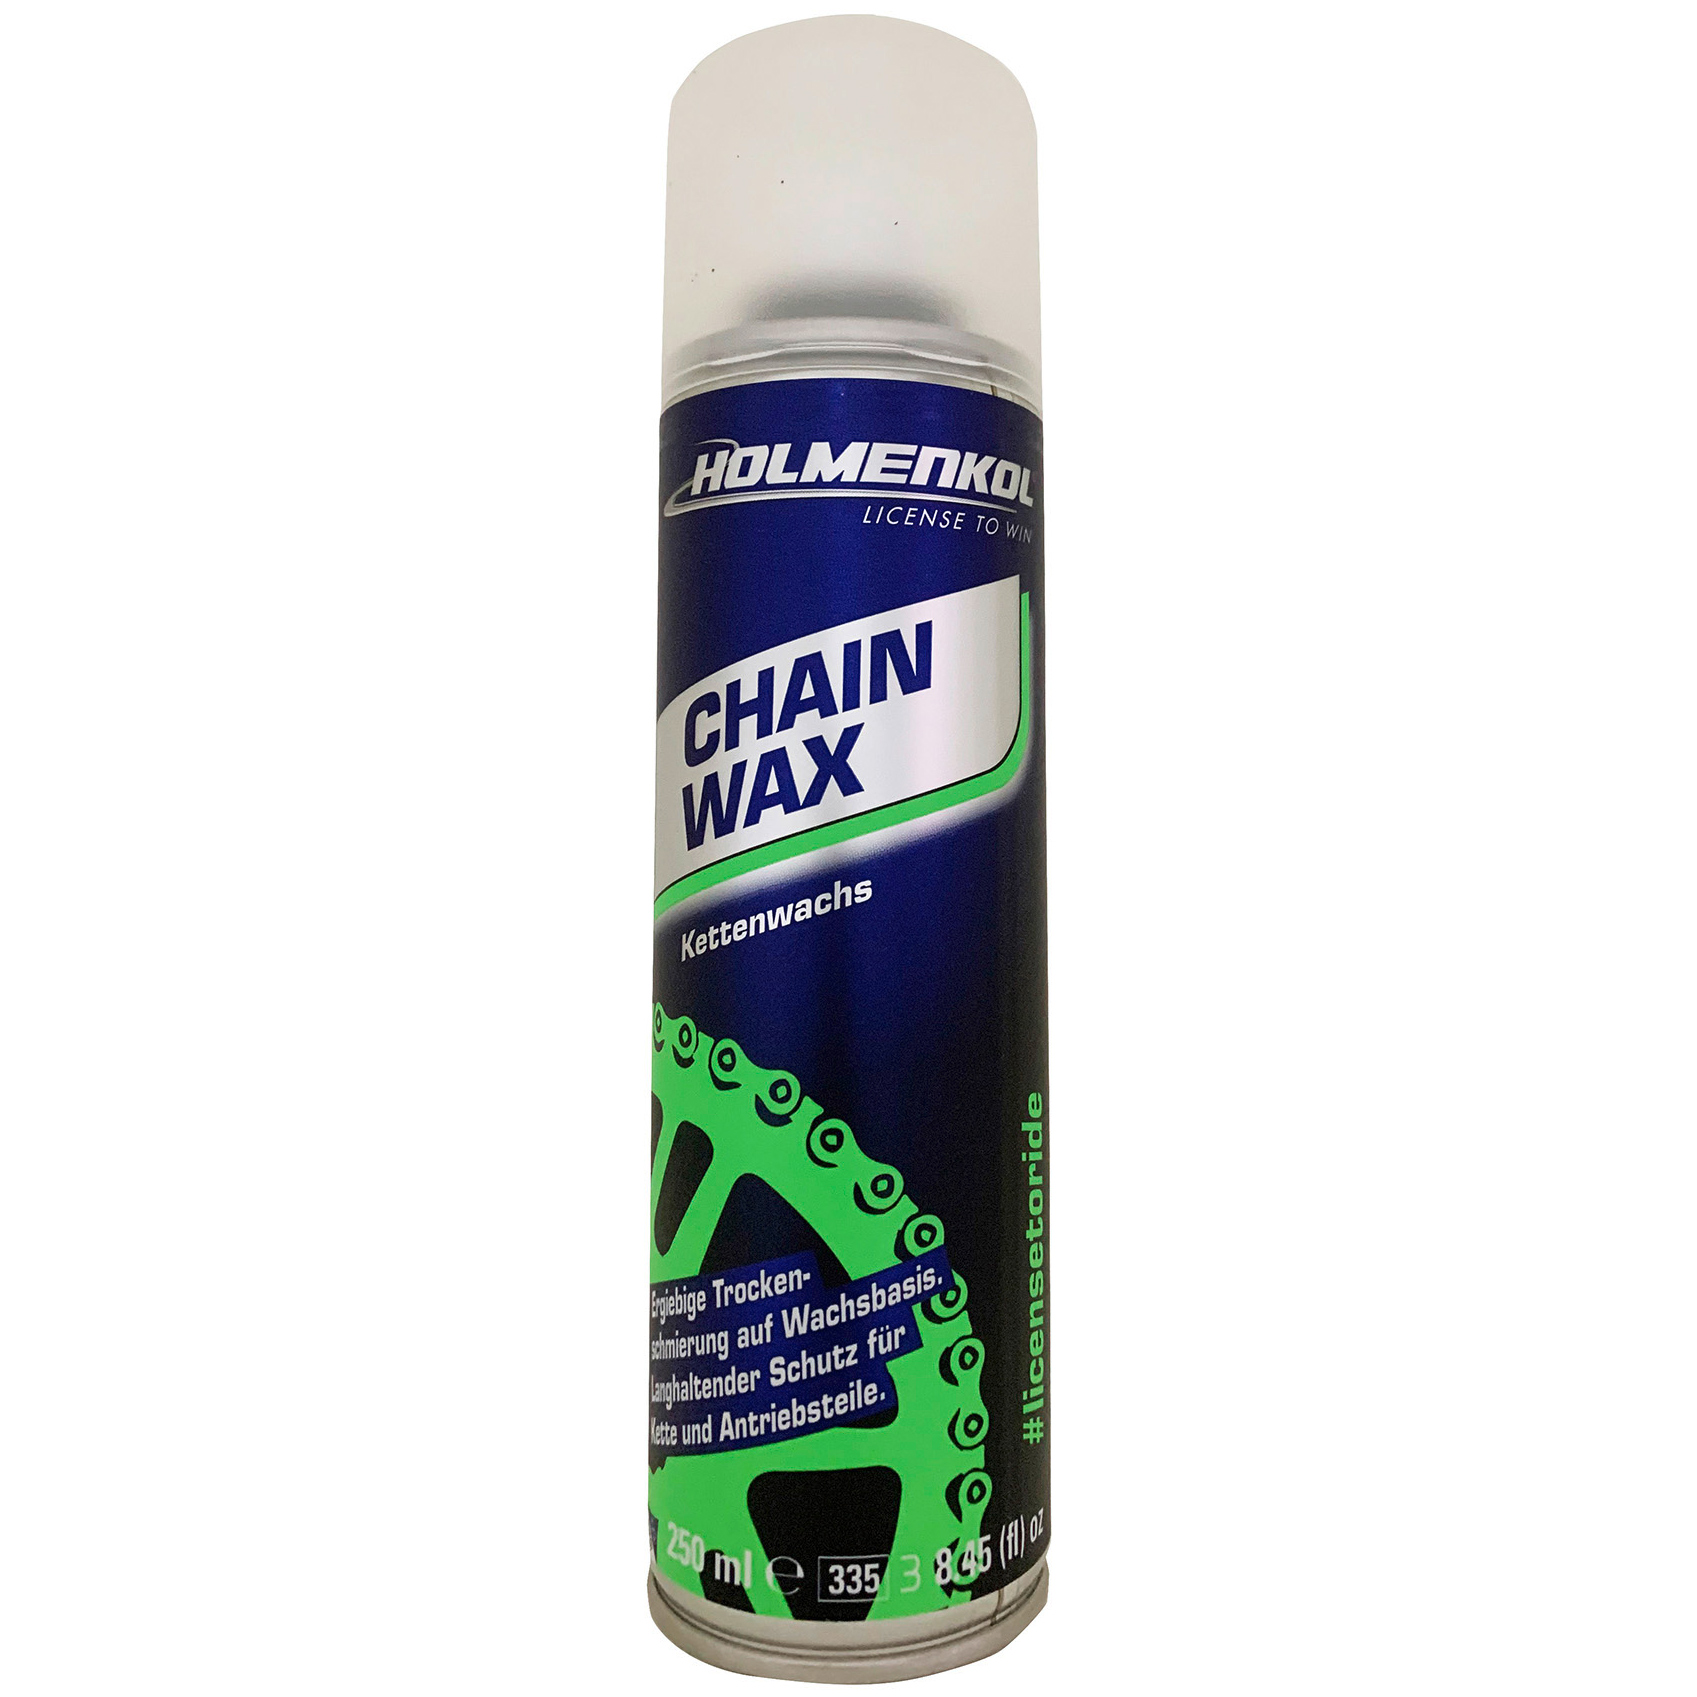 Productfoto van Holmenkol Chain Wax - 250ml Spray